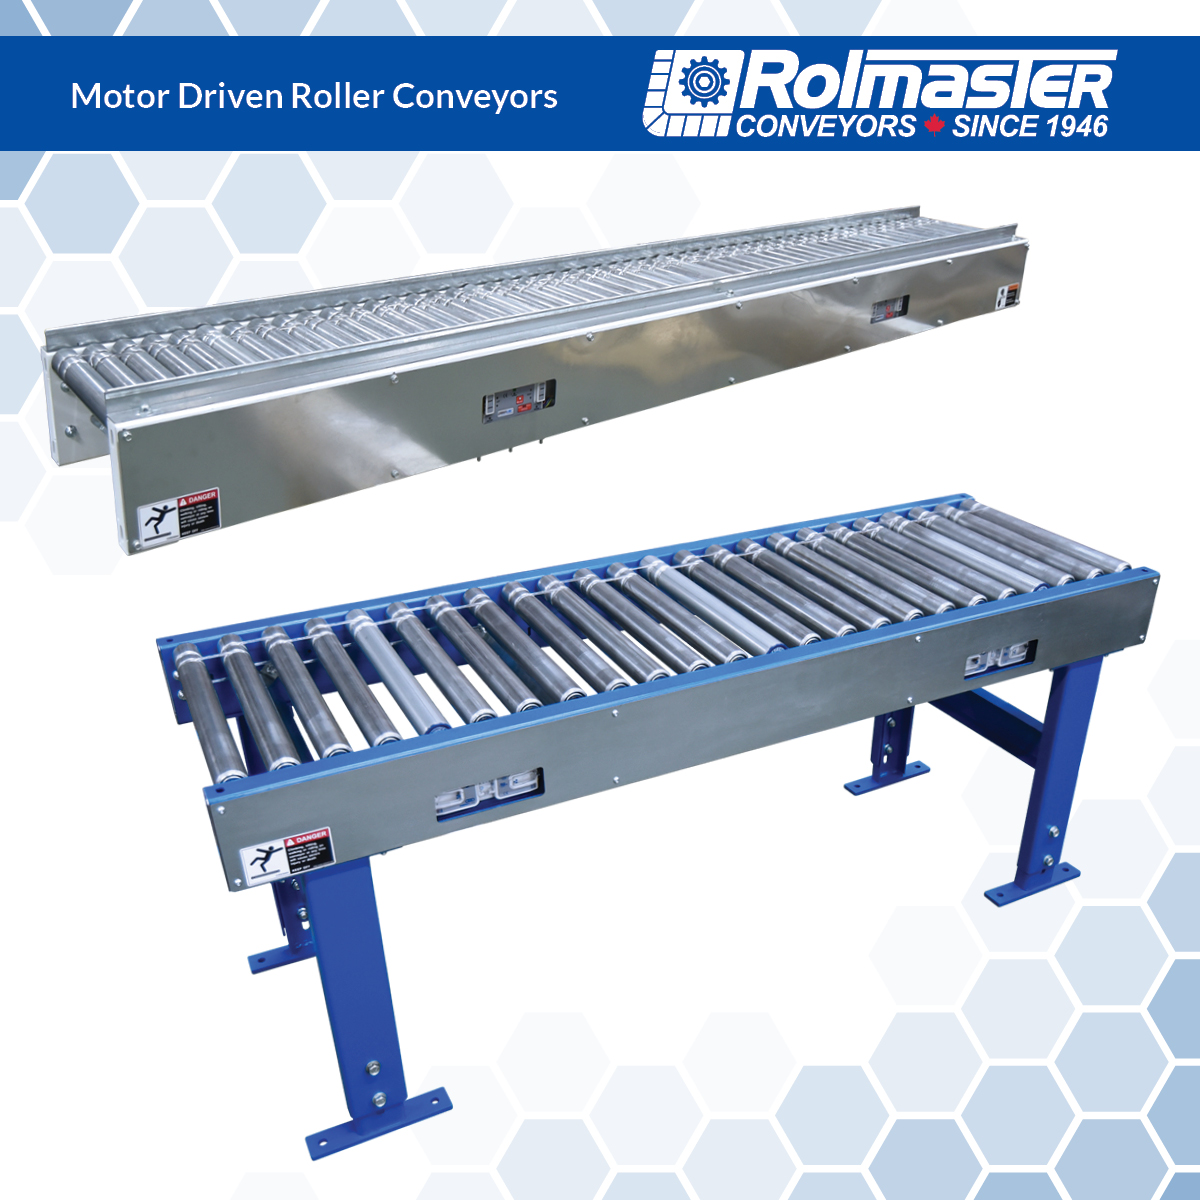 Motor Driven Roller Conveyors - MDR